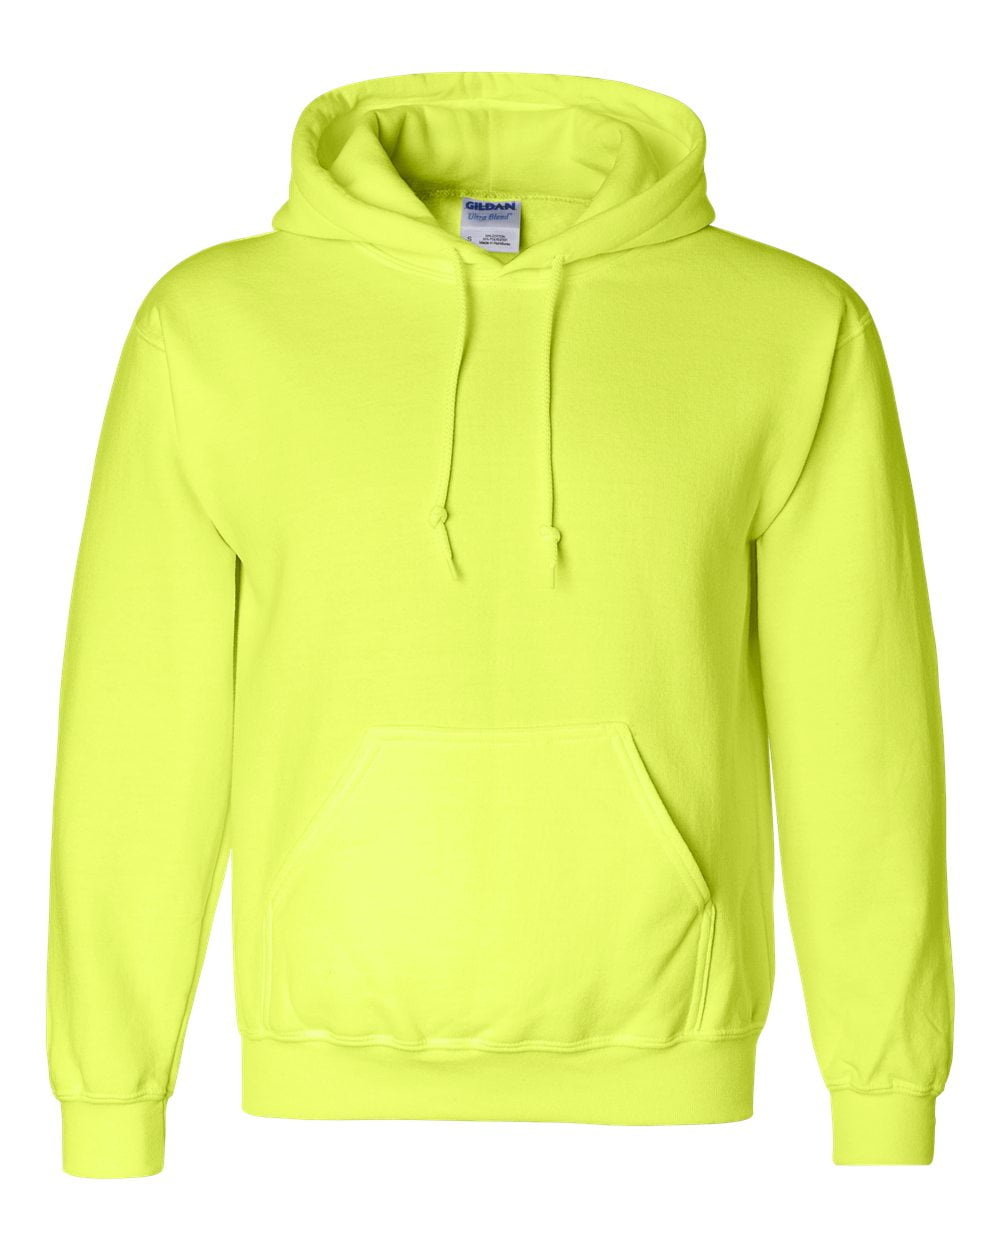 Gildan - Gildan - DryBlend® Hooded Sweatshirt - Artix - Walmart.com ...